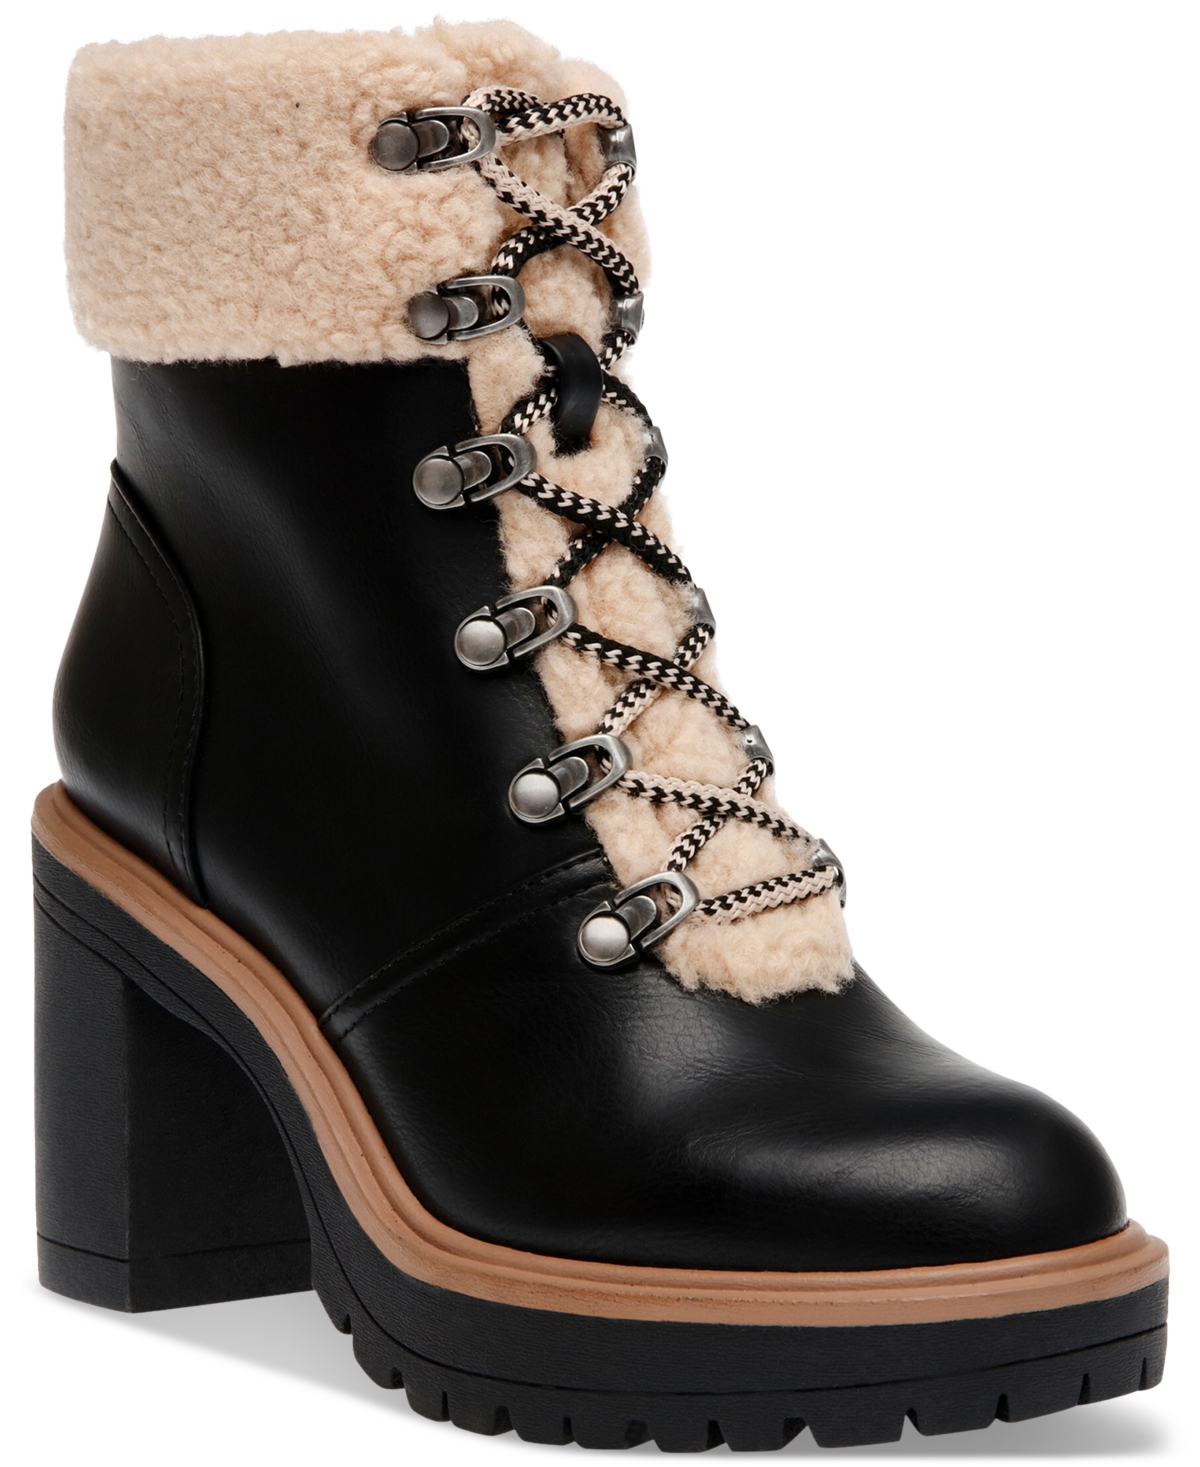 Women's Jyll Lace-Up Cozy Block-Heel Boots - Black